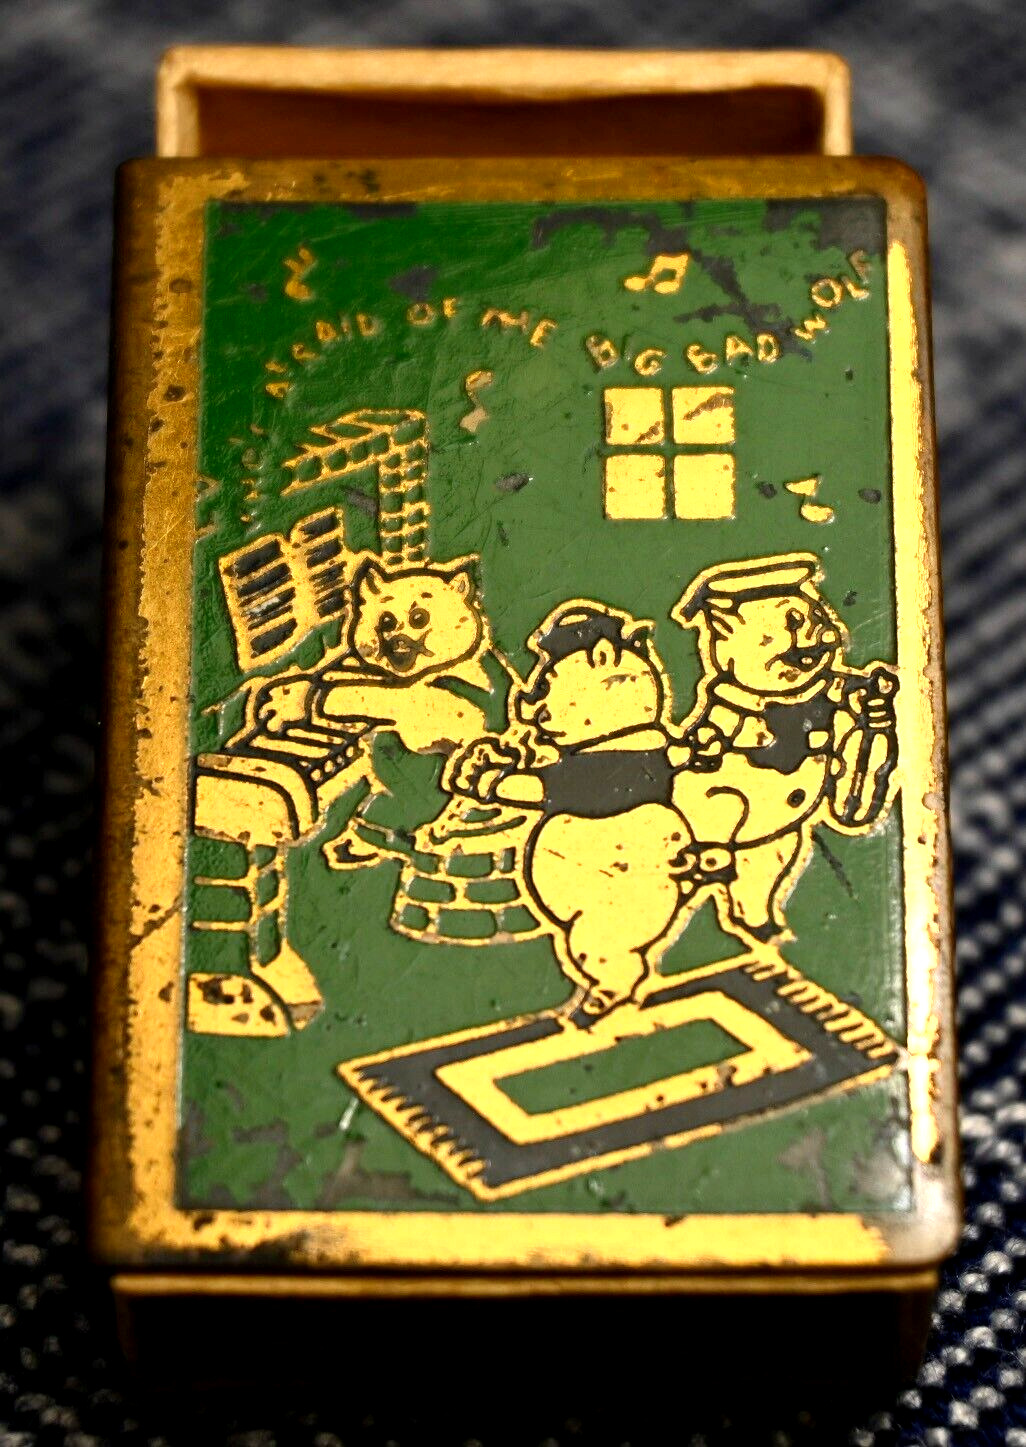 Rare Find 1933 Antique Disney Metal Matchbox with real wood. Big Bad wolf Motif.